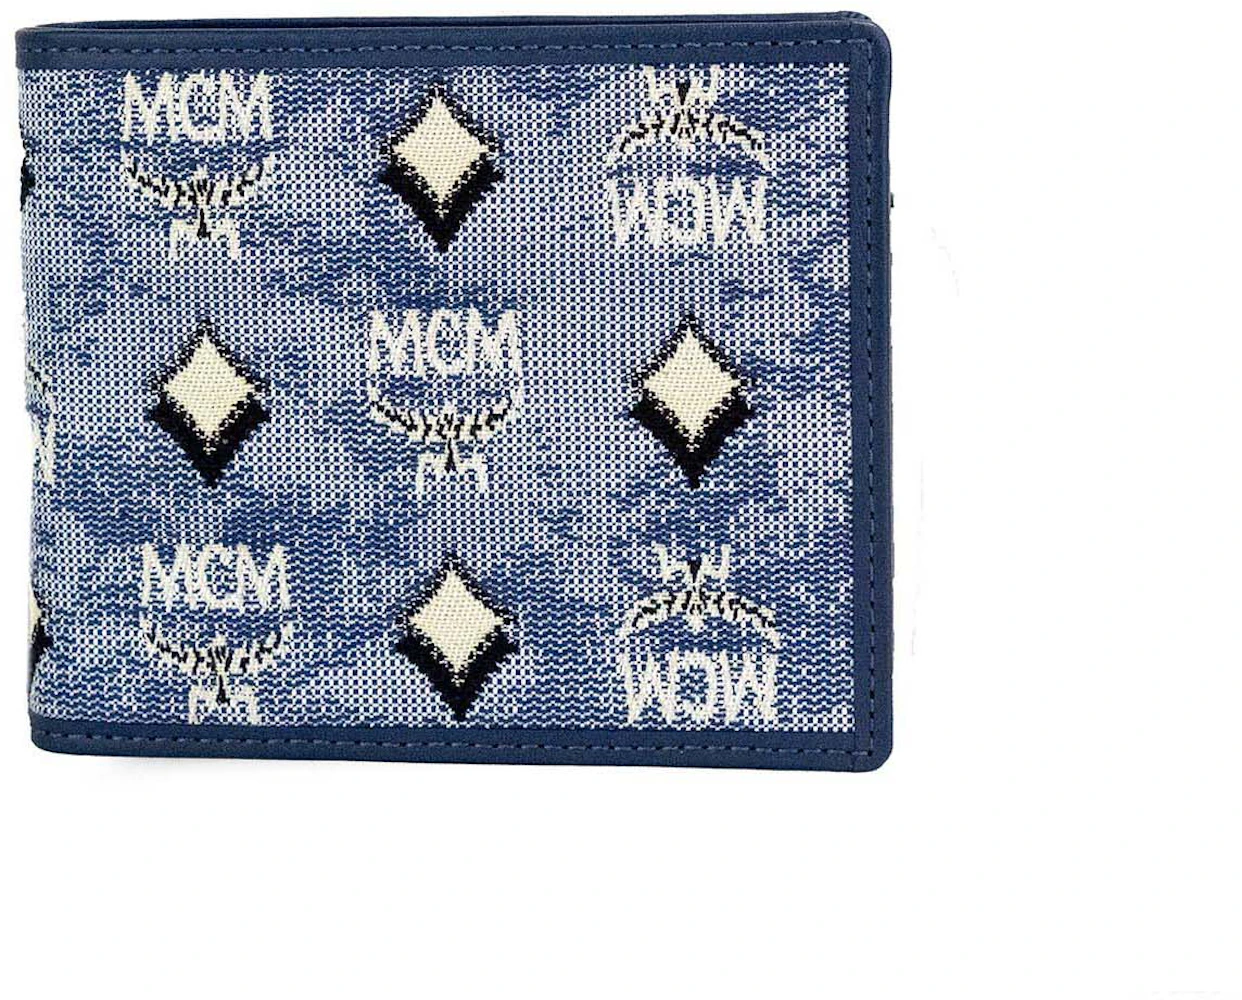 MCM Logo-Print Bifold Wallet - Black for Men